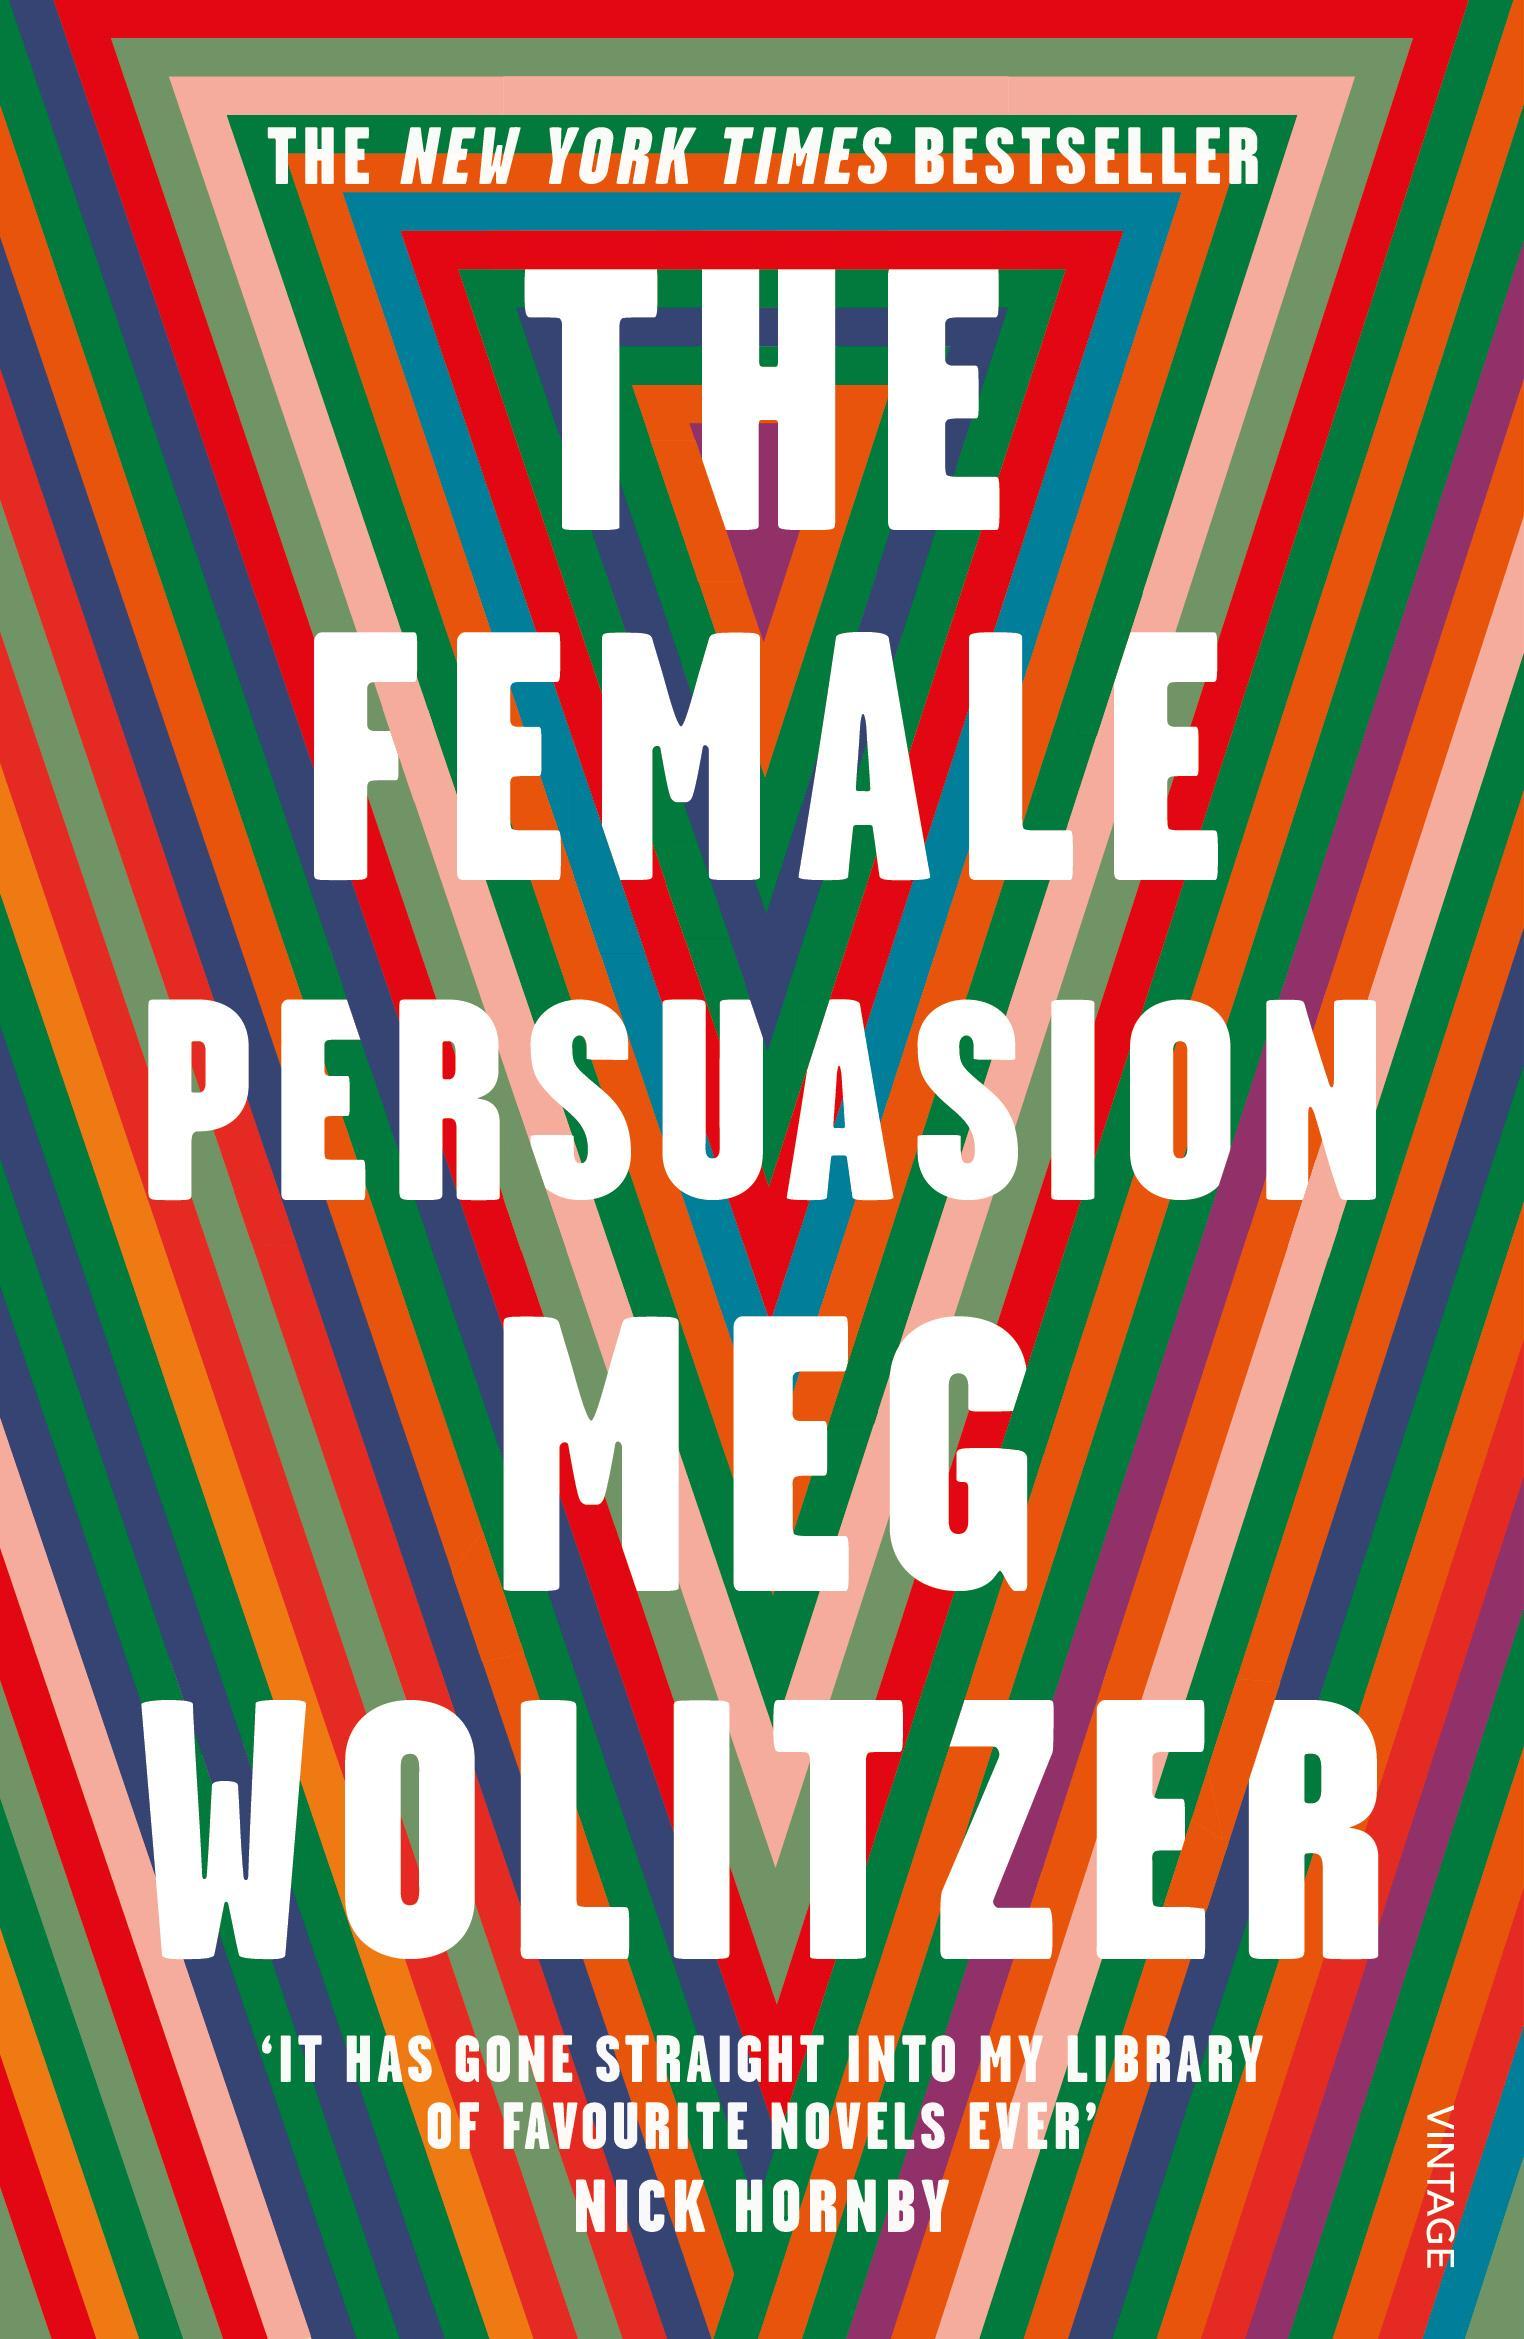 Female Persuasion - Meg Wolitzer